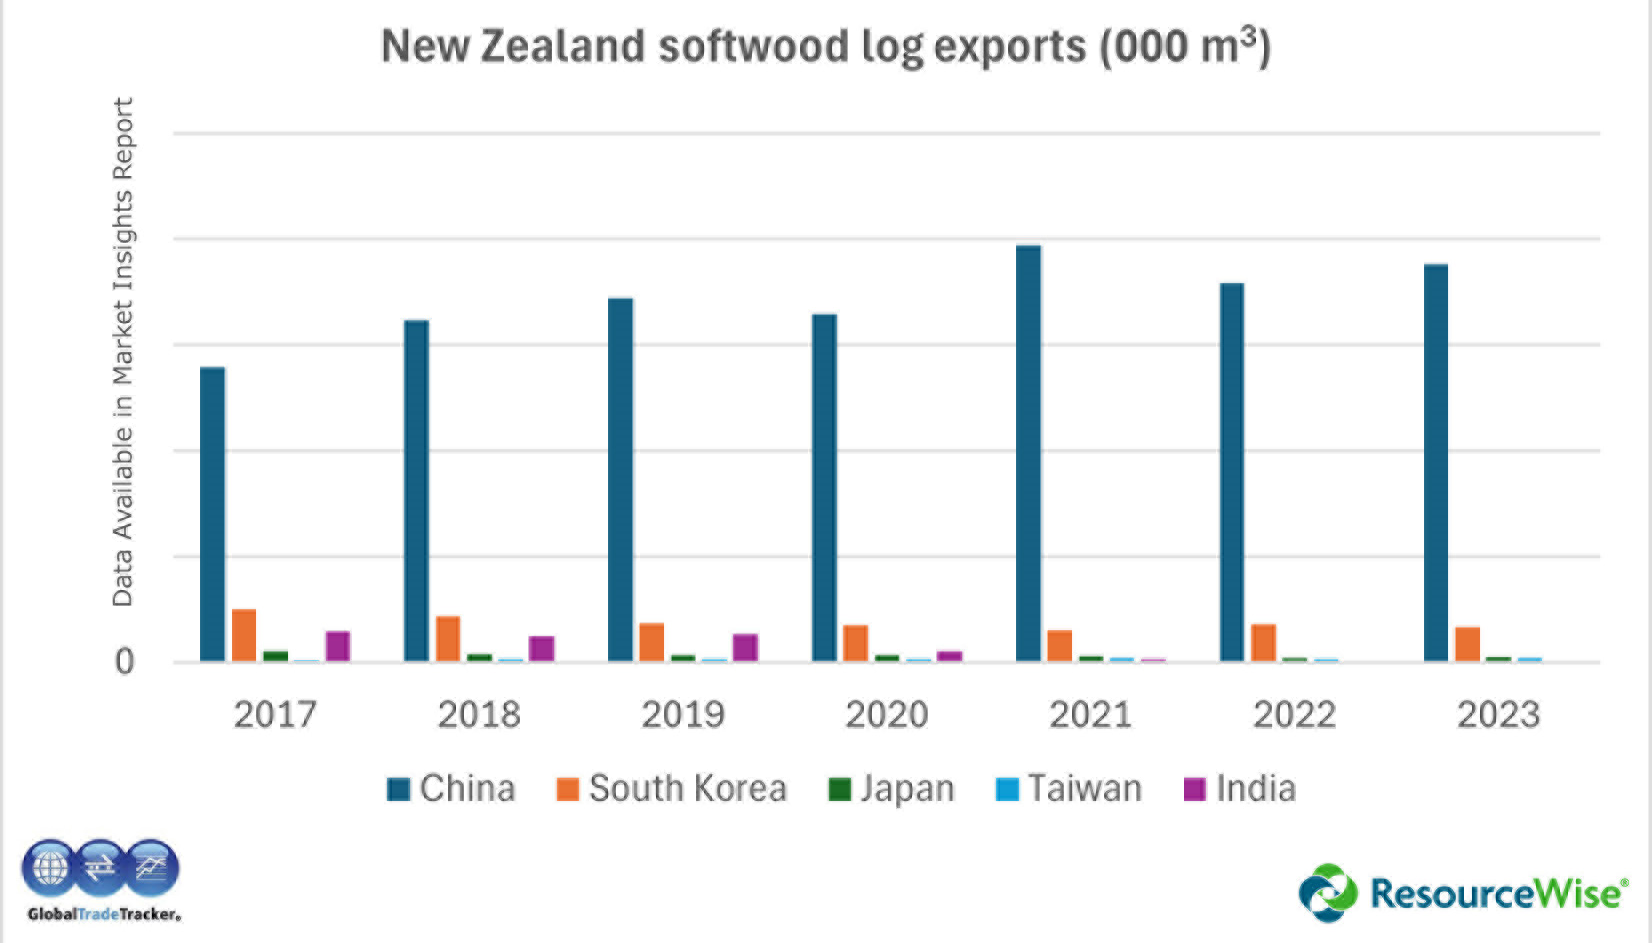 New Zealand's Softwood Log Exports: A Close Examination